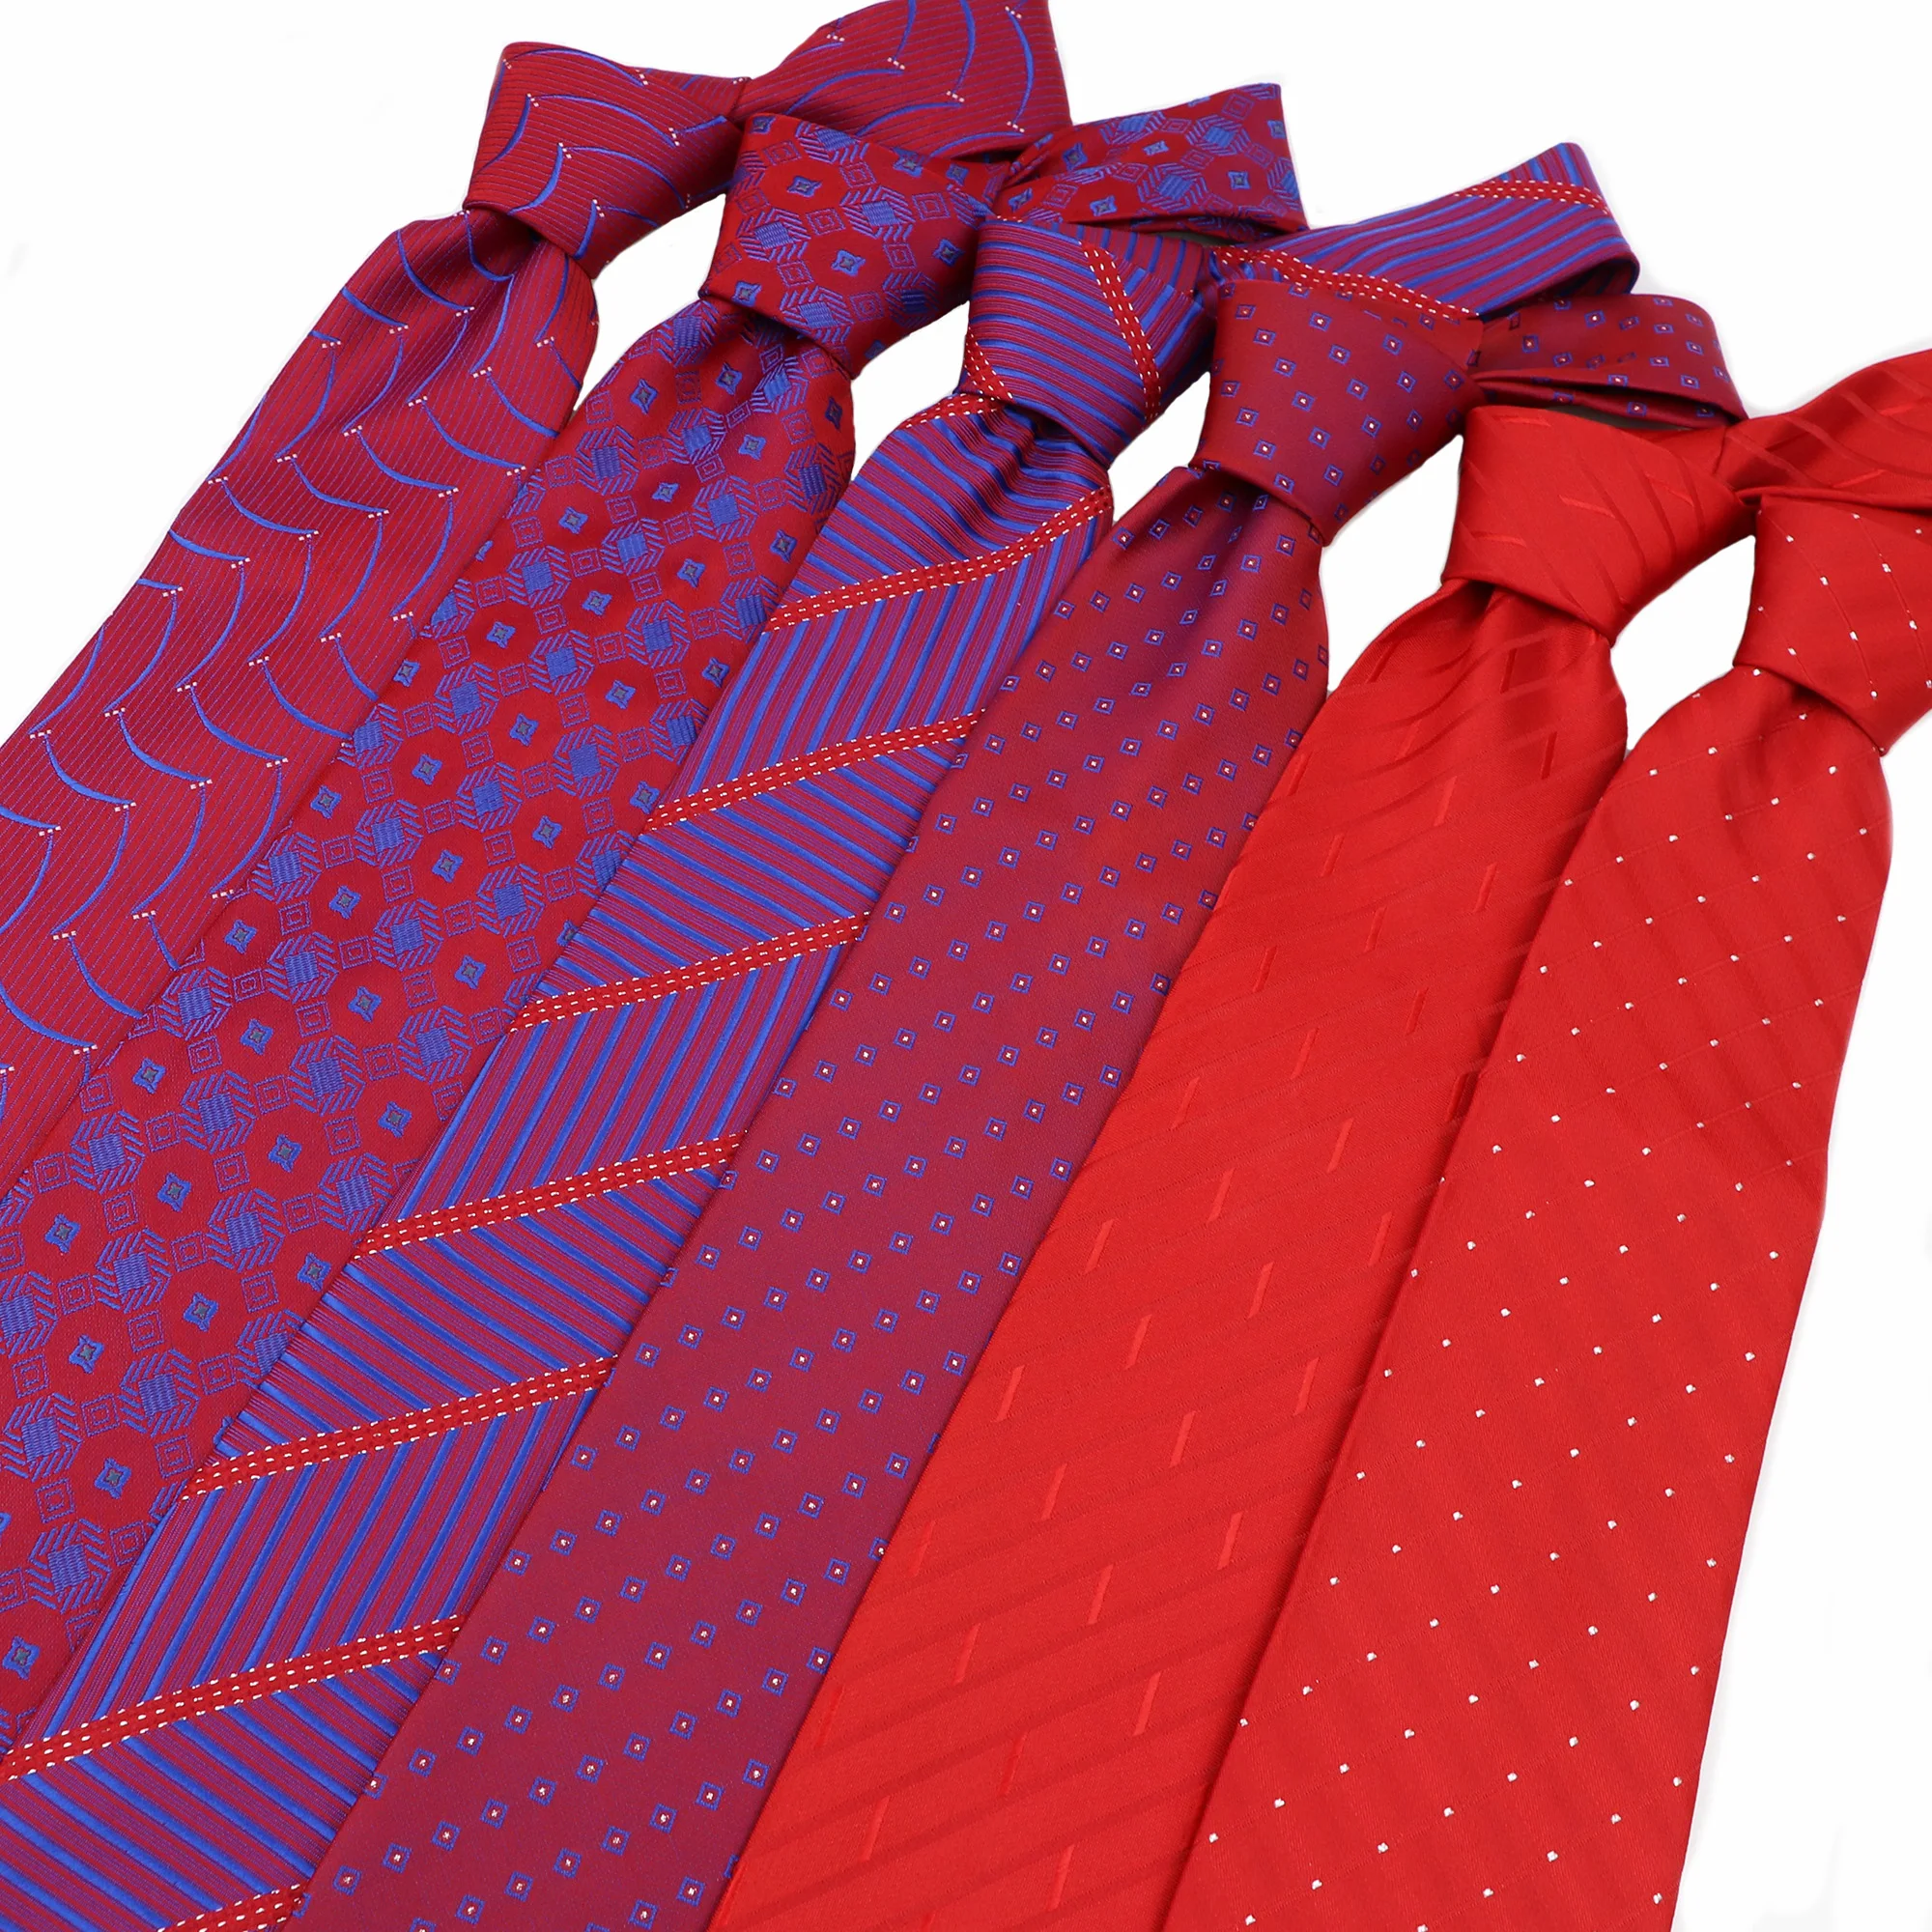 Classic Striped Ties WOVEN JACQUARD Silk Men's Suits Tie Necktie Red #L026